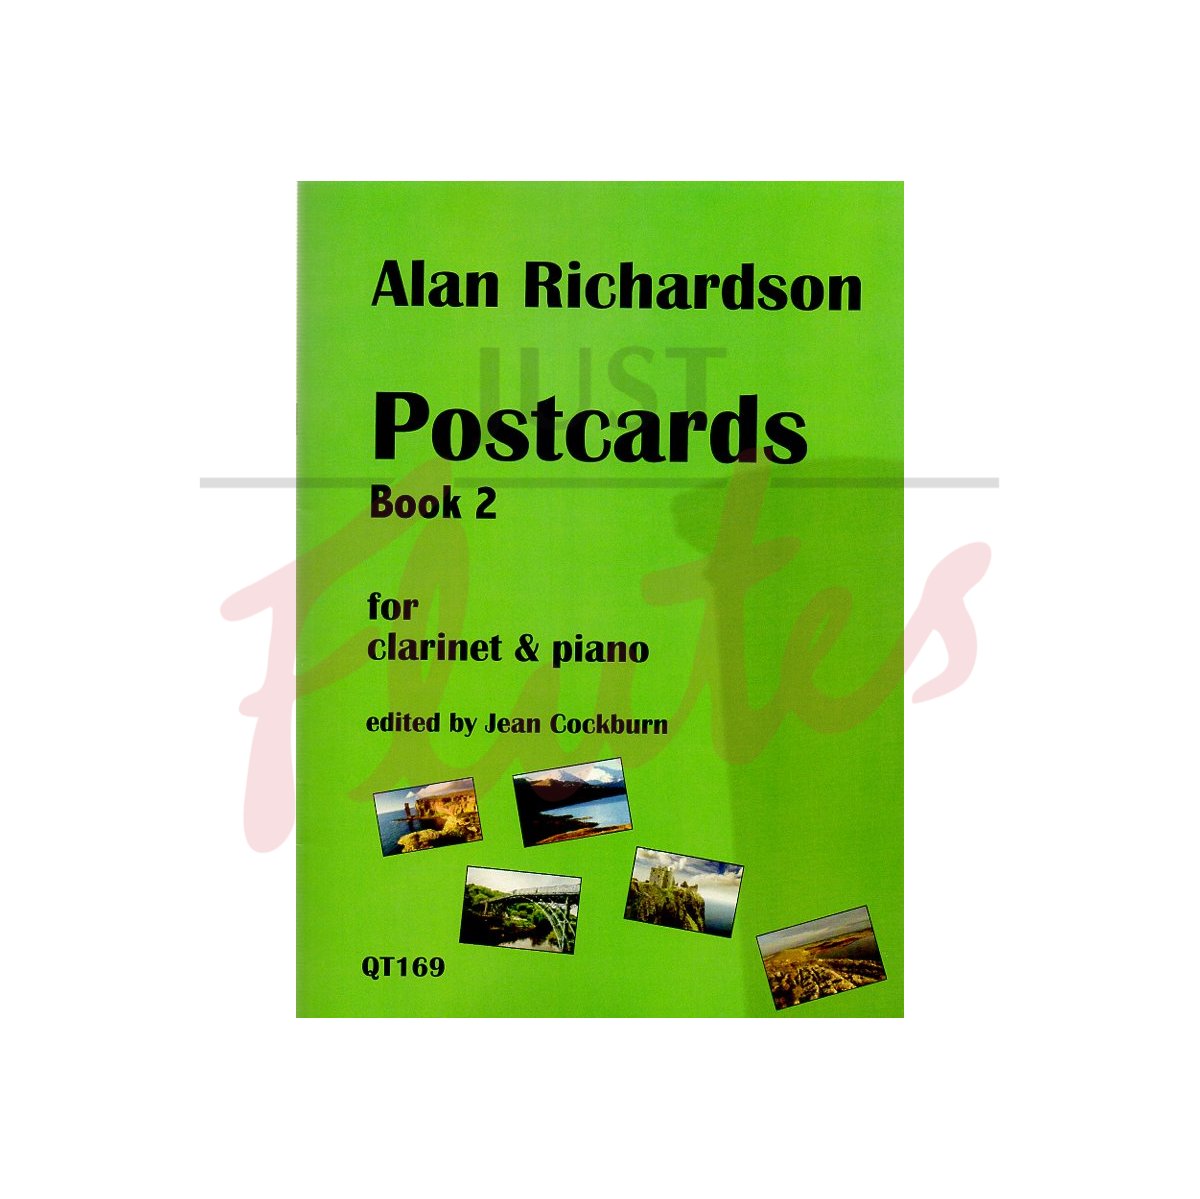 Postcards Book 2